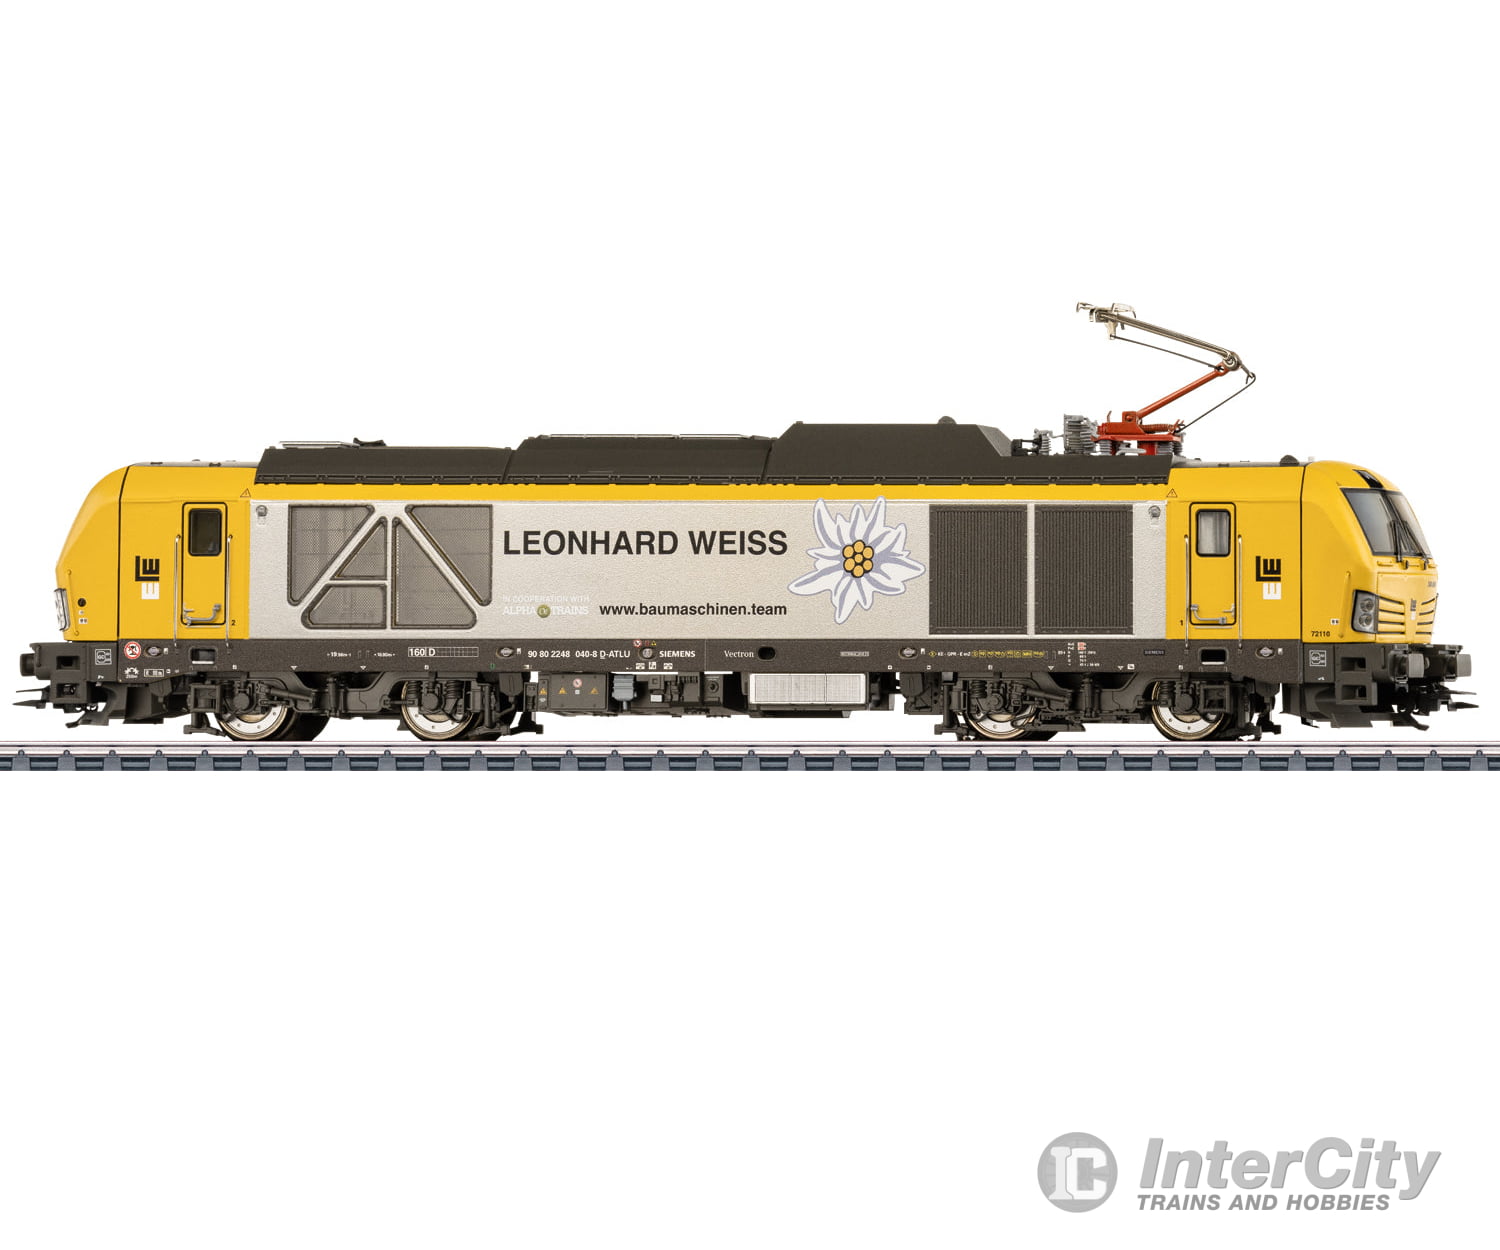 Marklin 39296 Ho Leonhard Weiss Class 248 Dual Power Locomotive European Locomotives